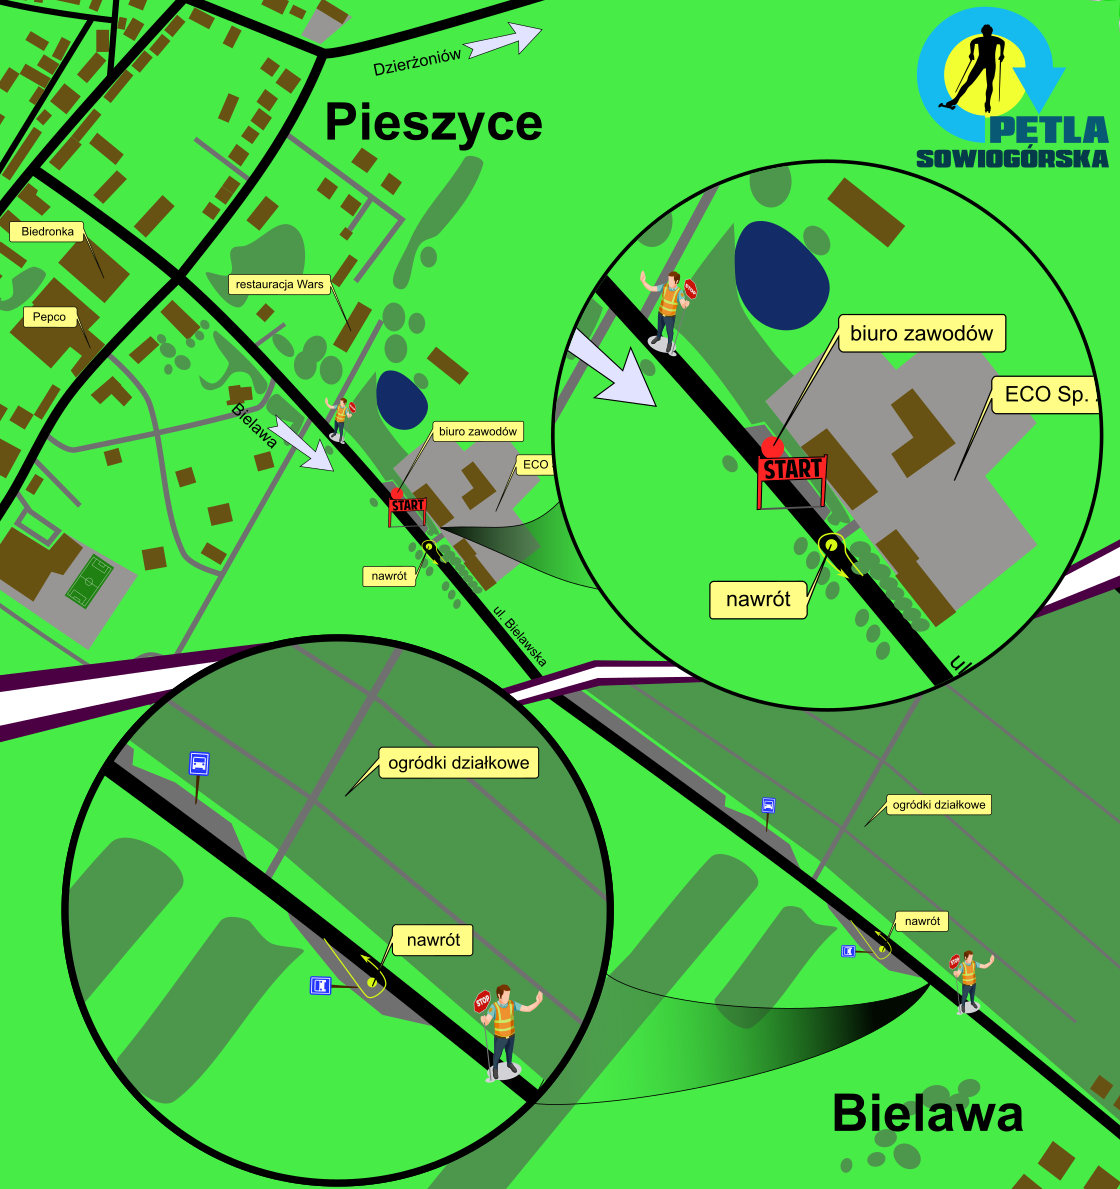 petla sowiogorska 2.0 mapa pogladowa